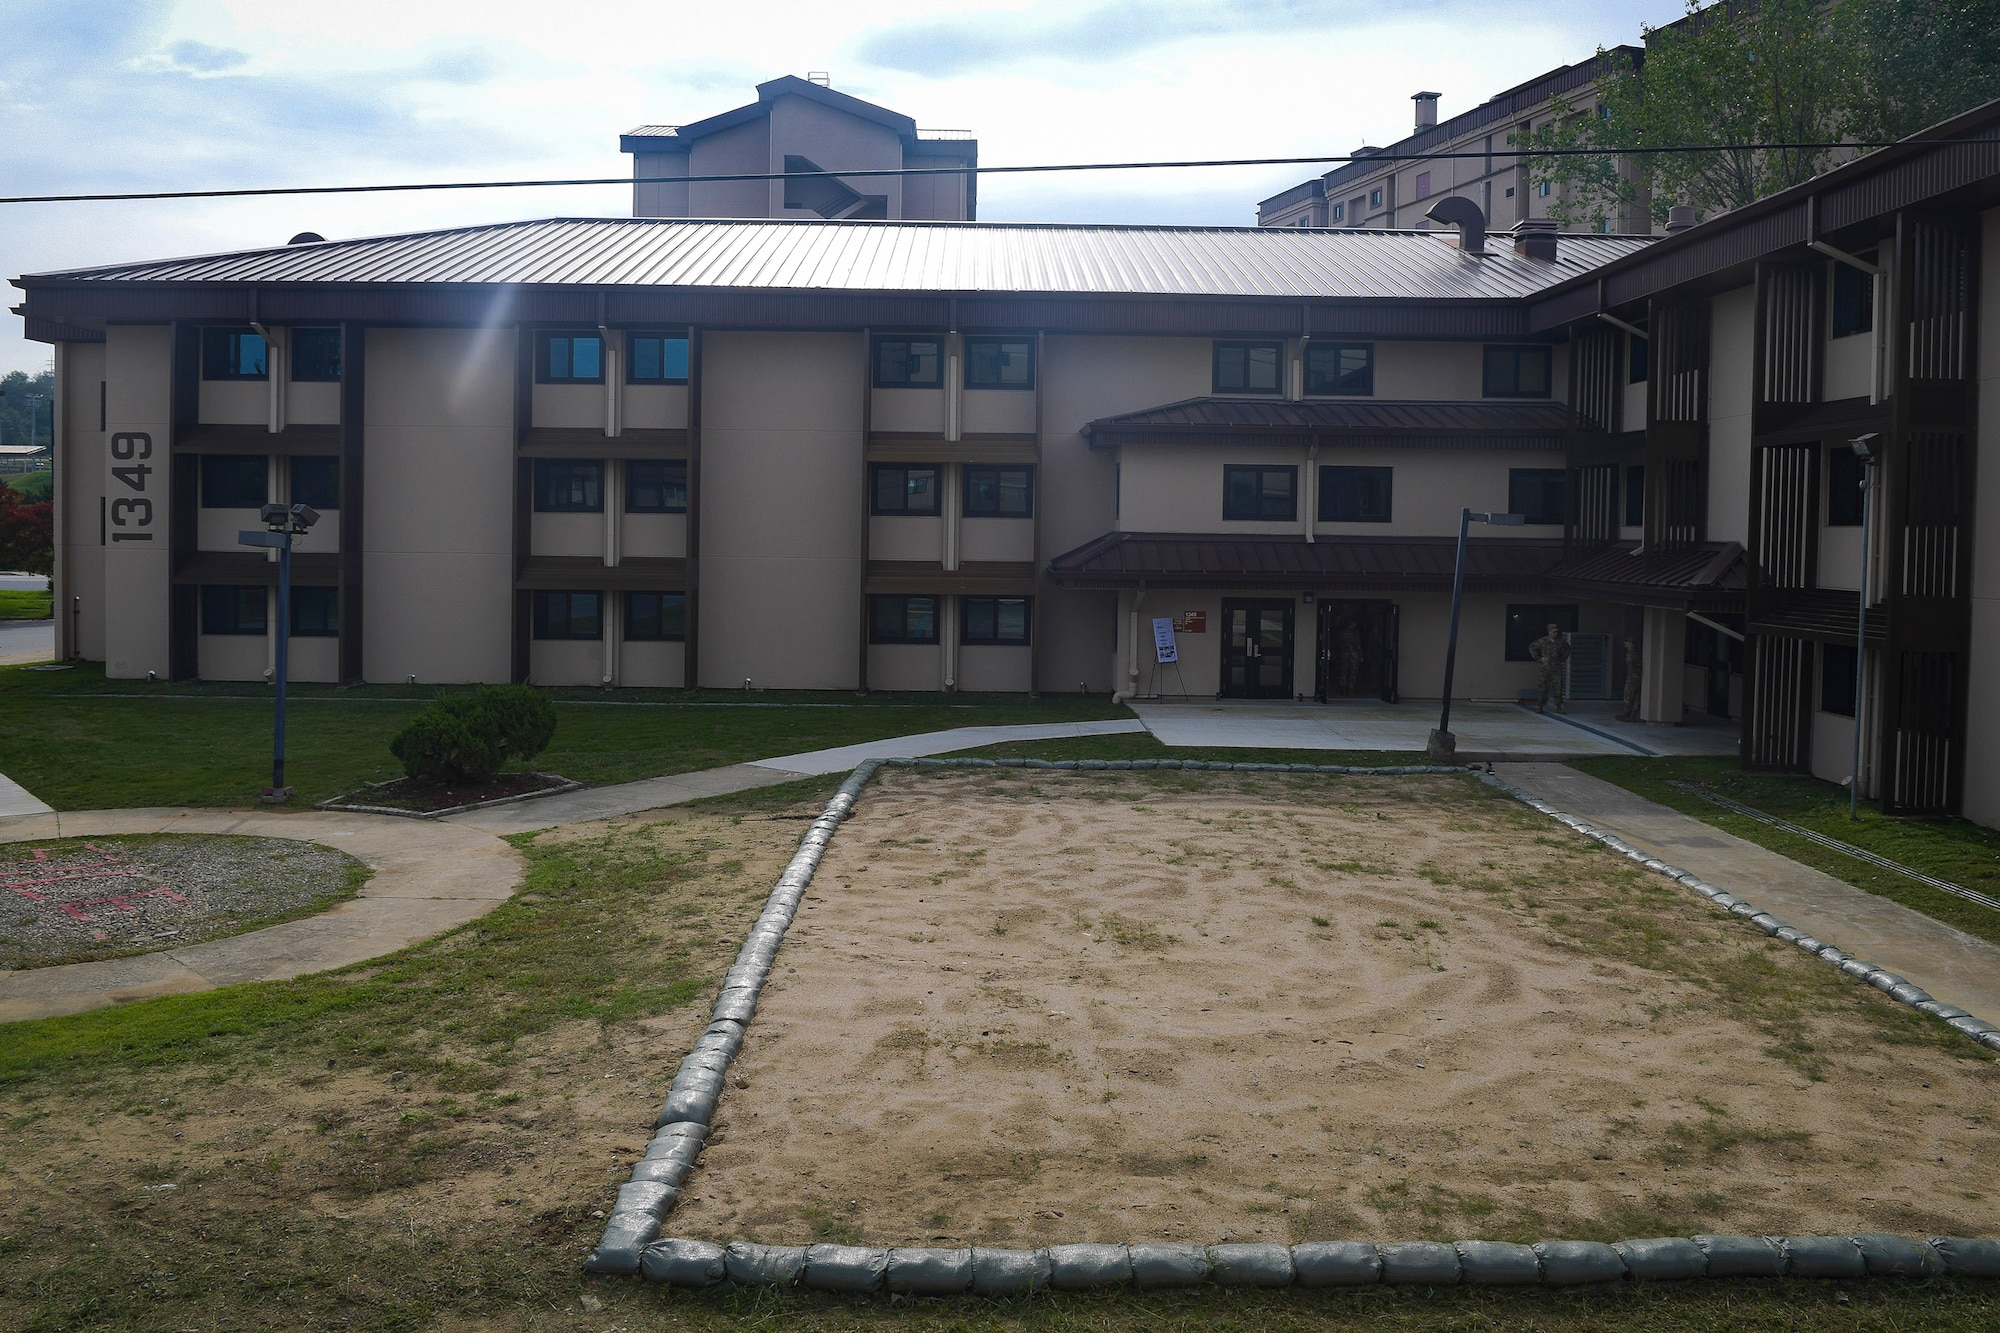 Team Osan reopens dorm after renovations